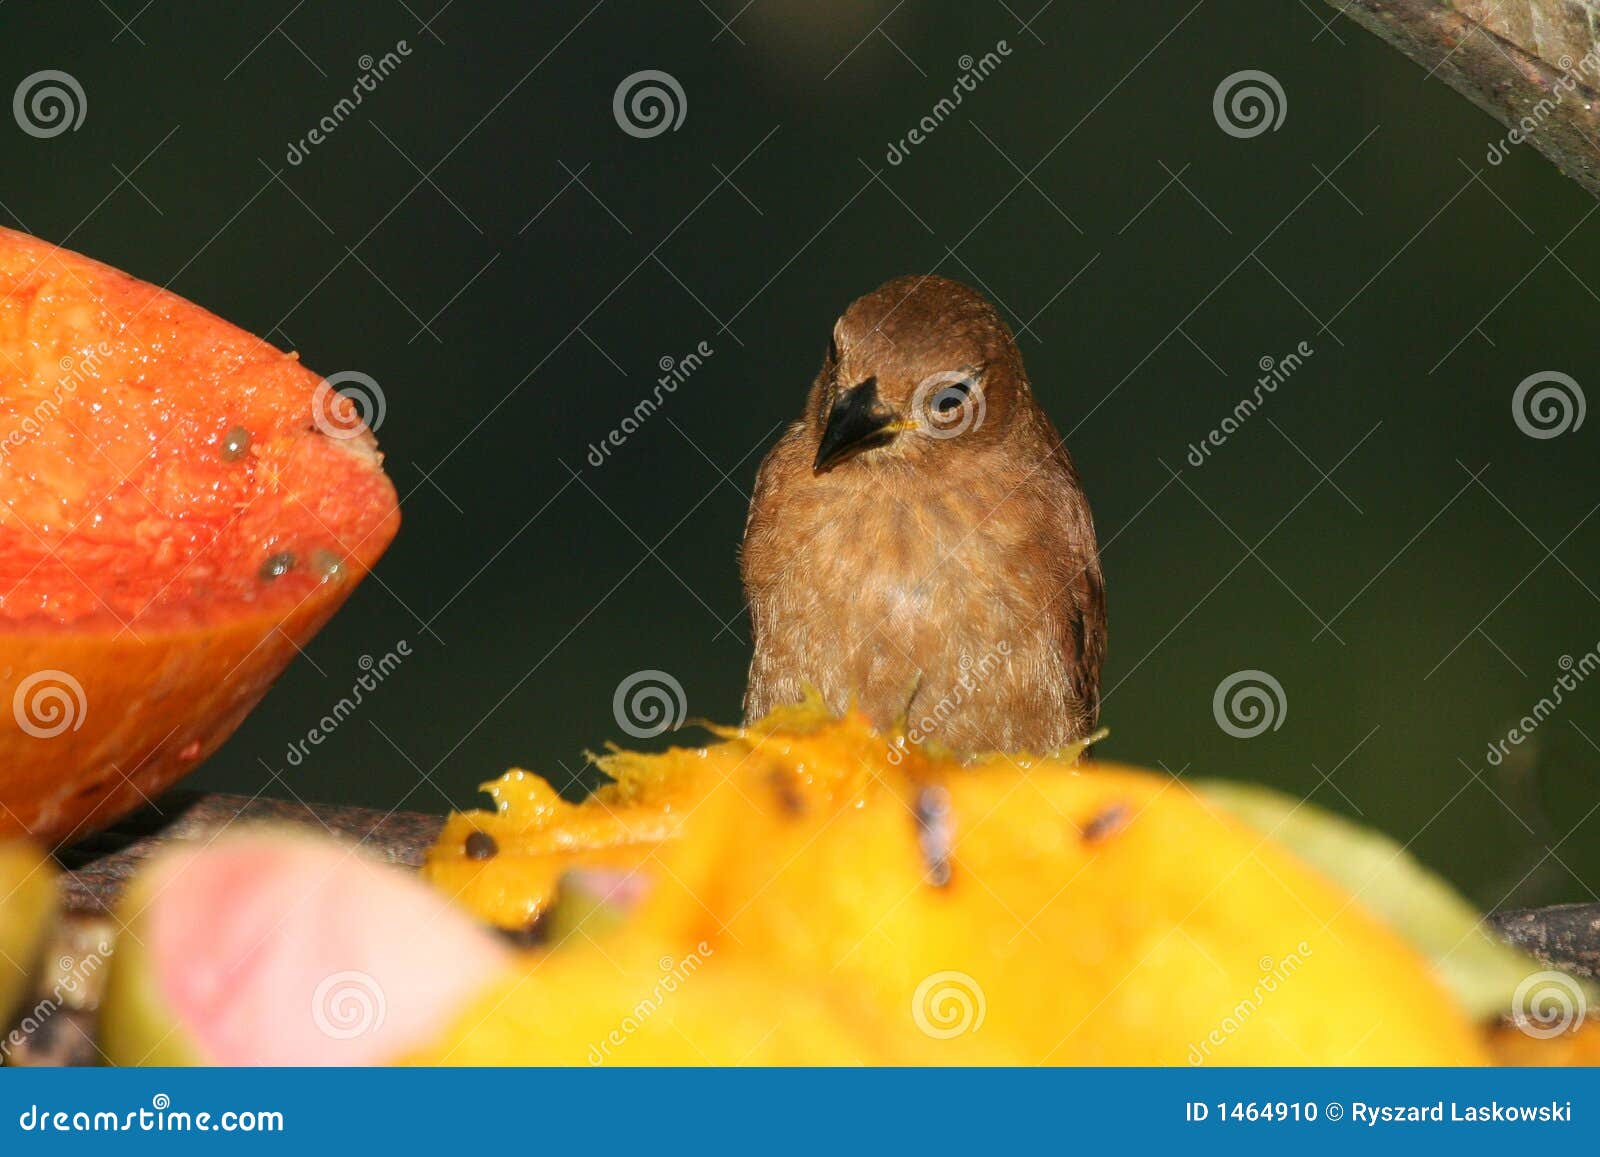 Tropical bird 3. Tropical bird eating papaya (Henri Pittier National Park, Venezuela)